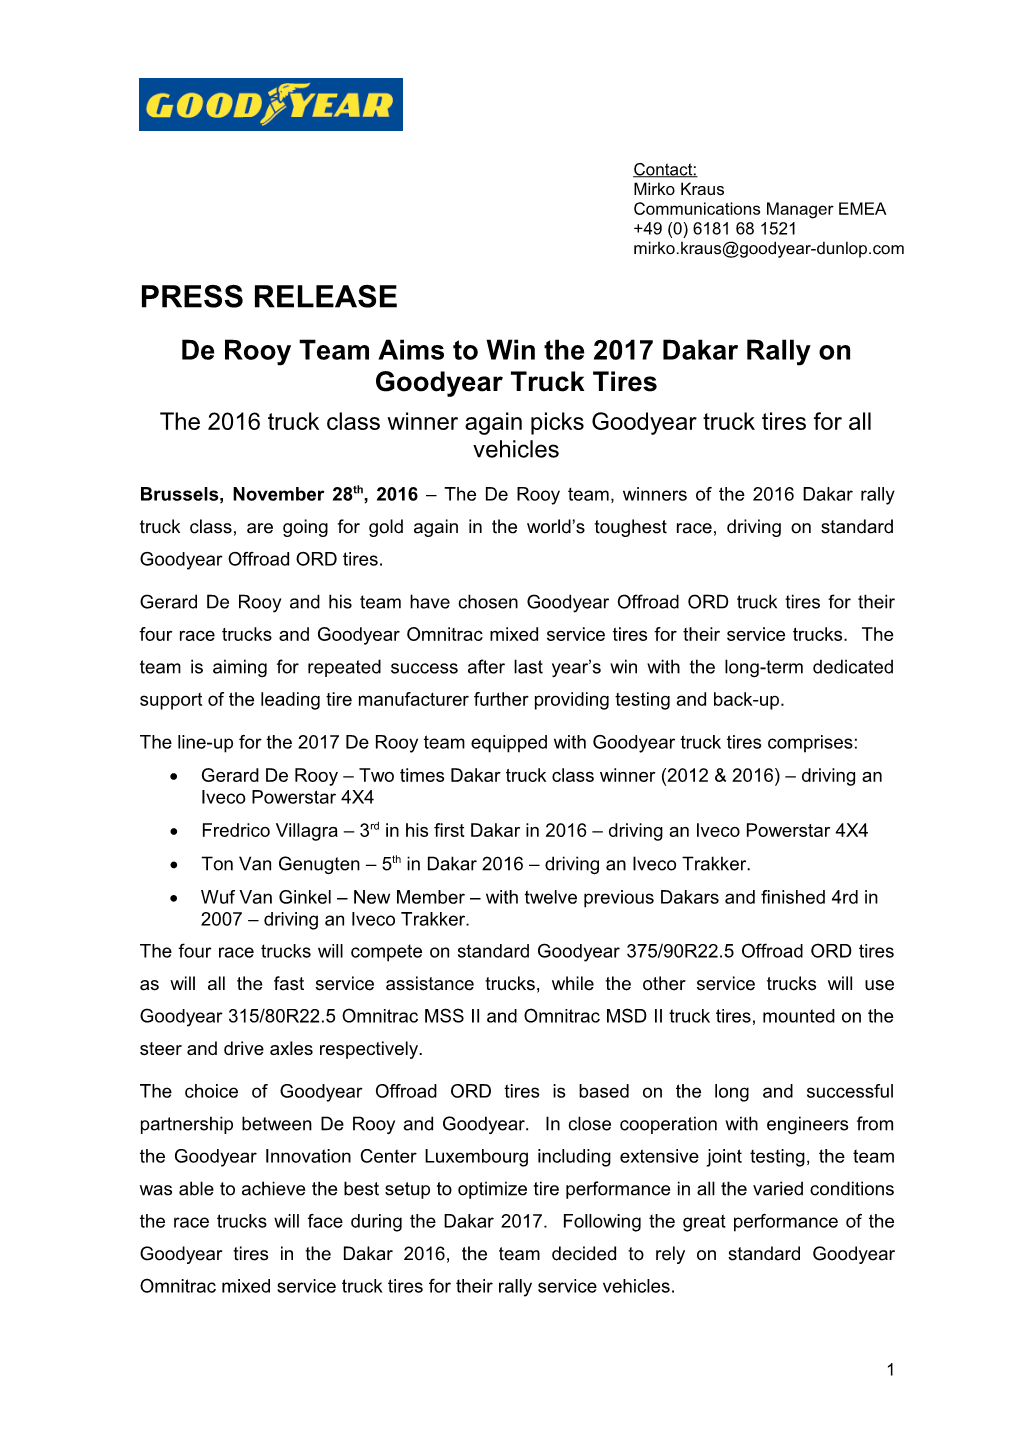 De Rooy Team Aims to Win the 2017 Dakar Rally on Goodyear Truck Tires